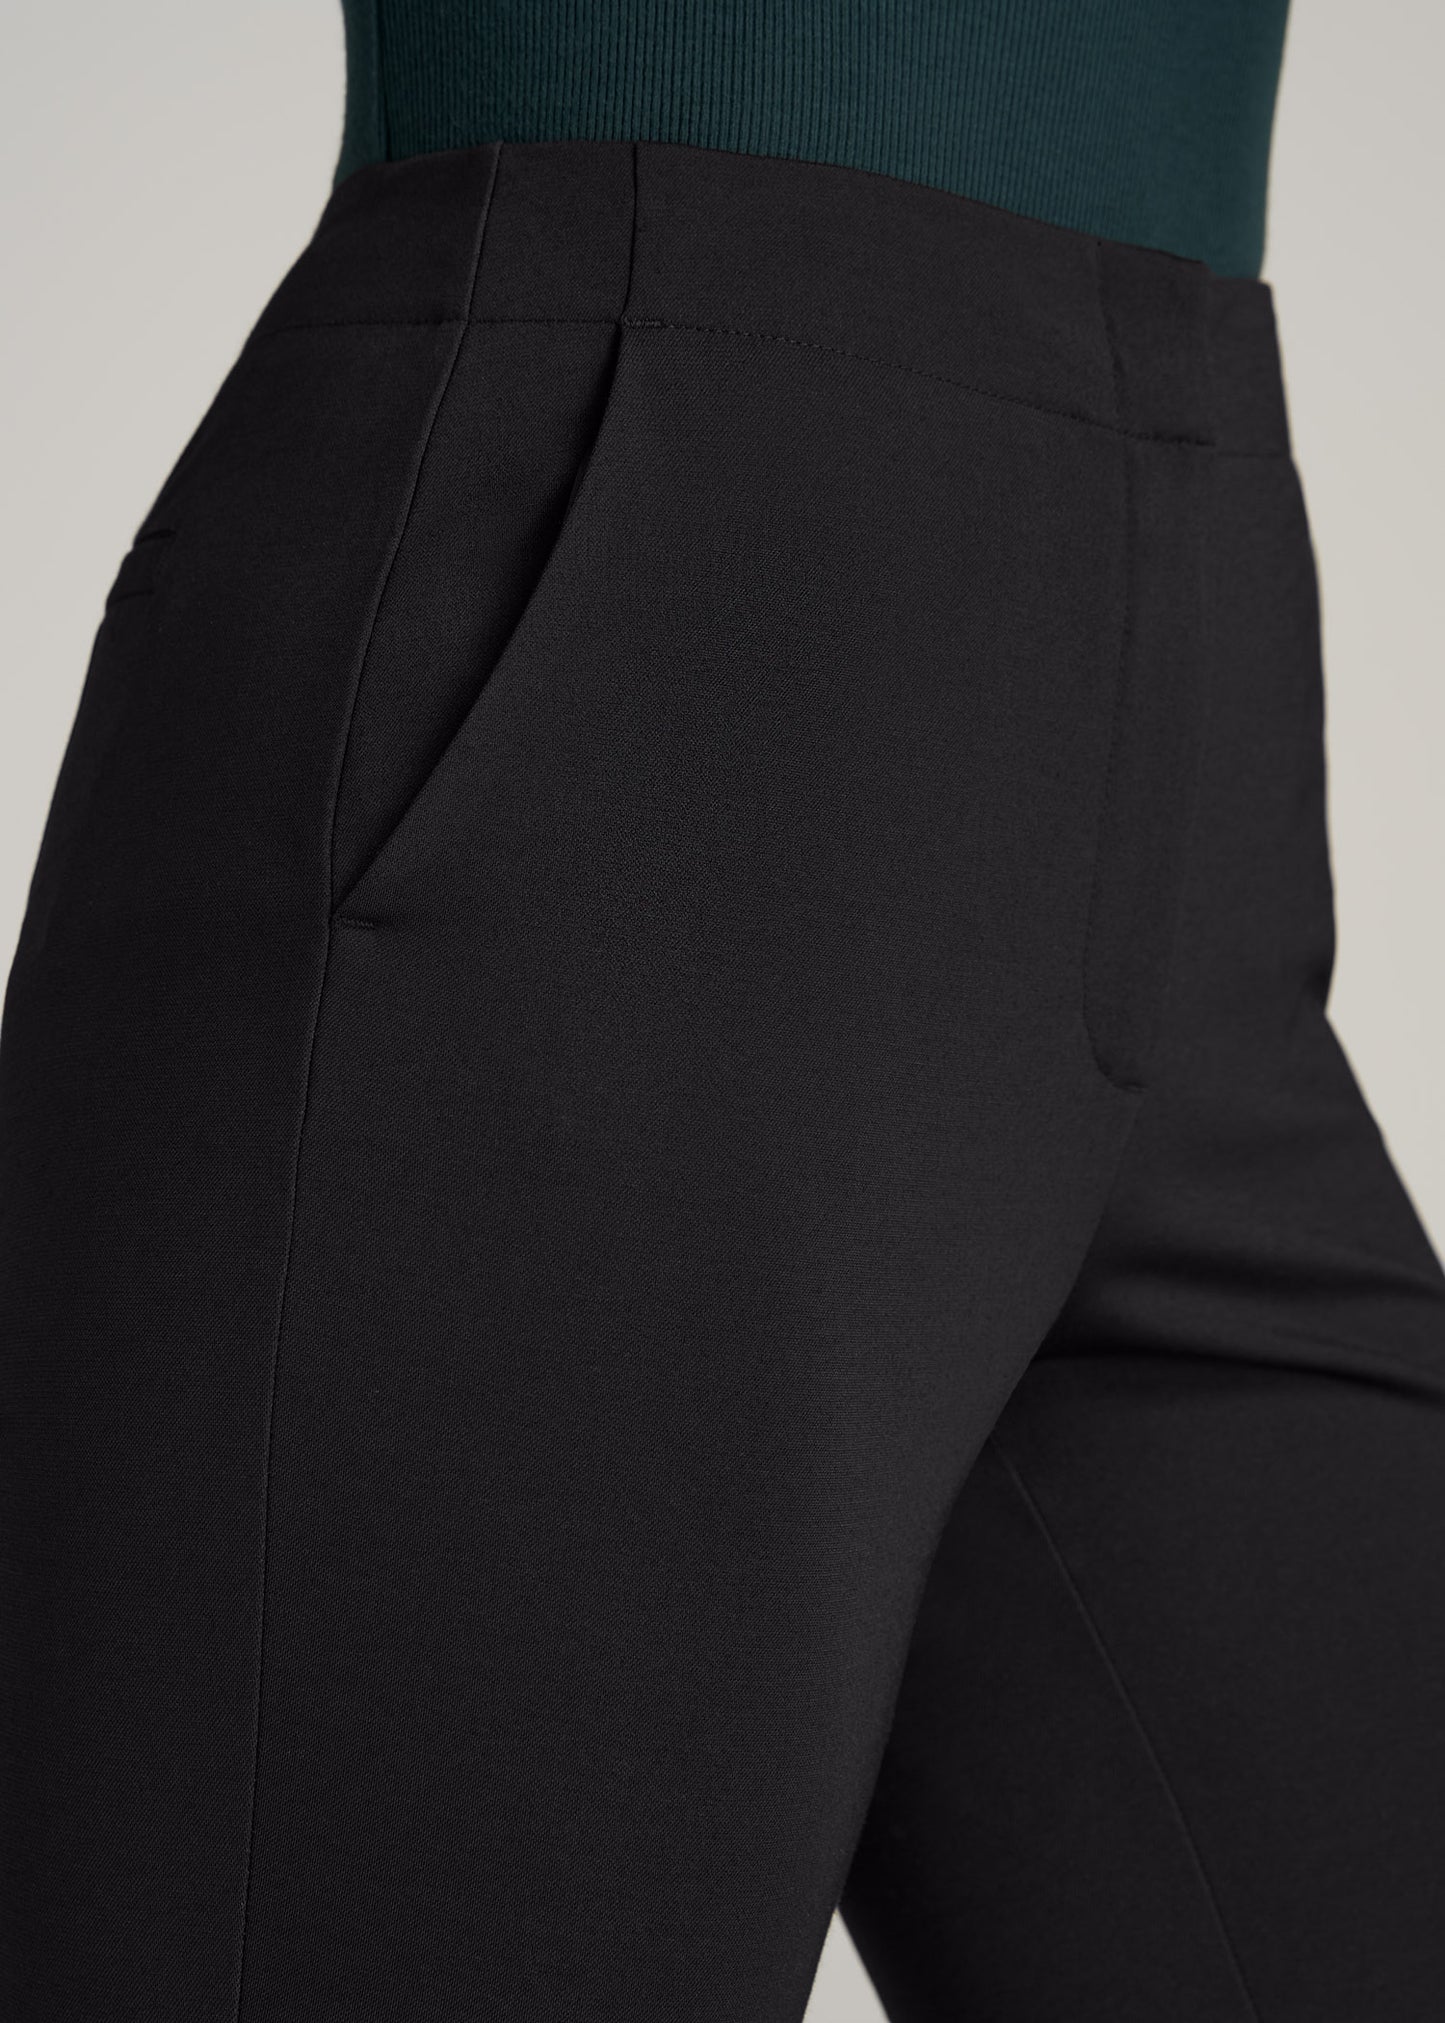 SLIM-Fit Dress Pants for Tall Women in Slate